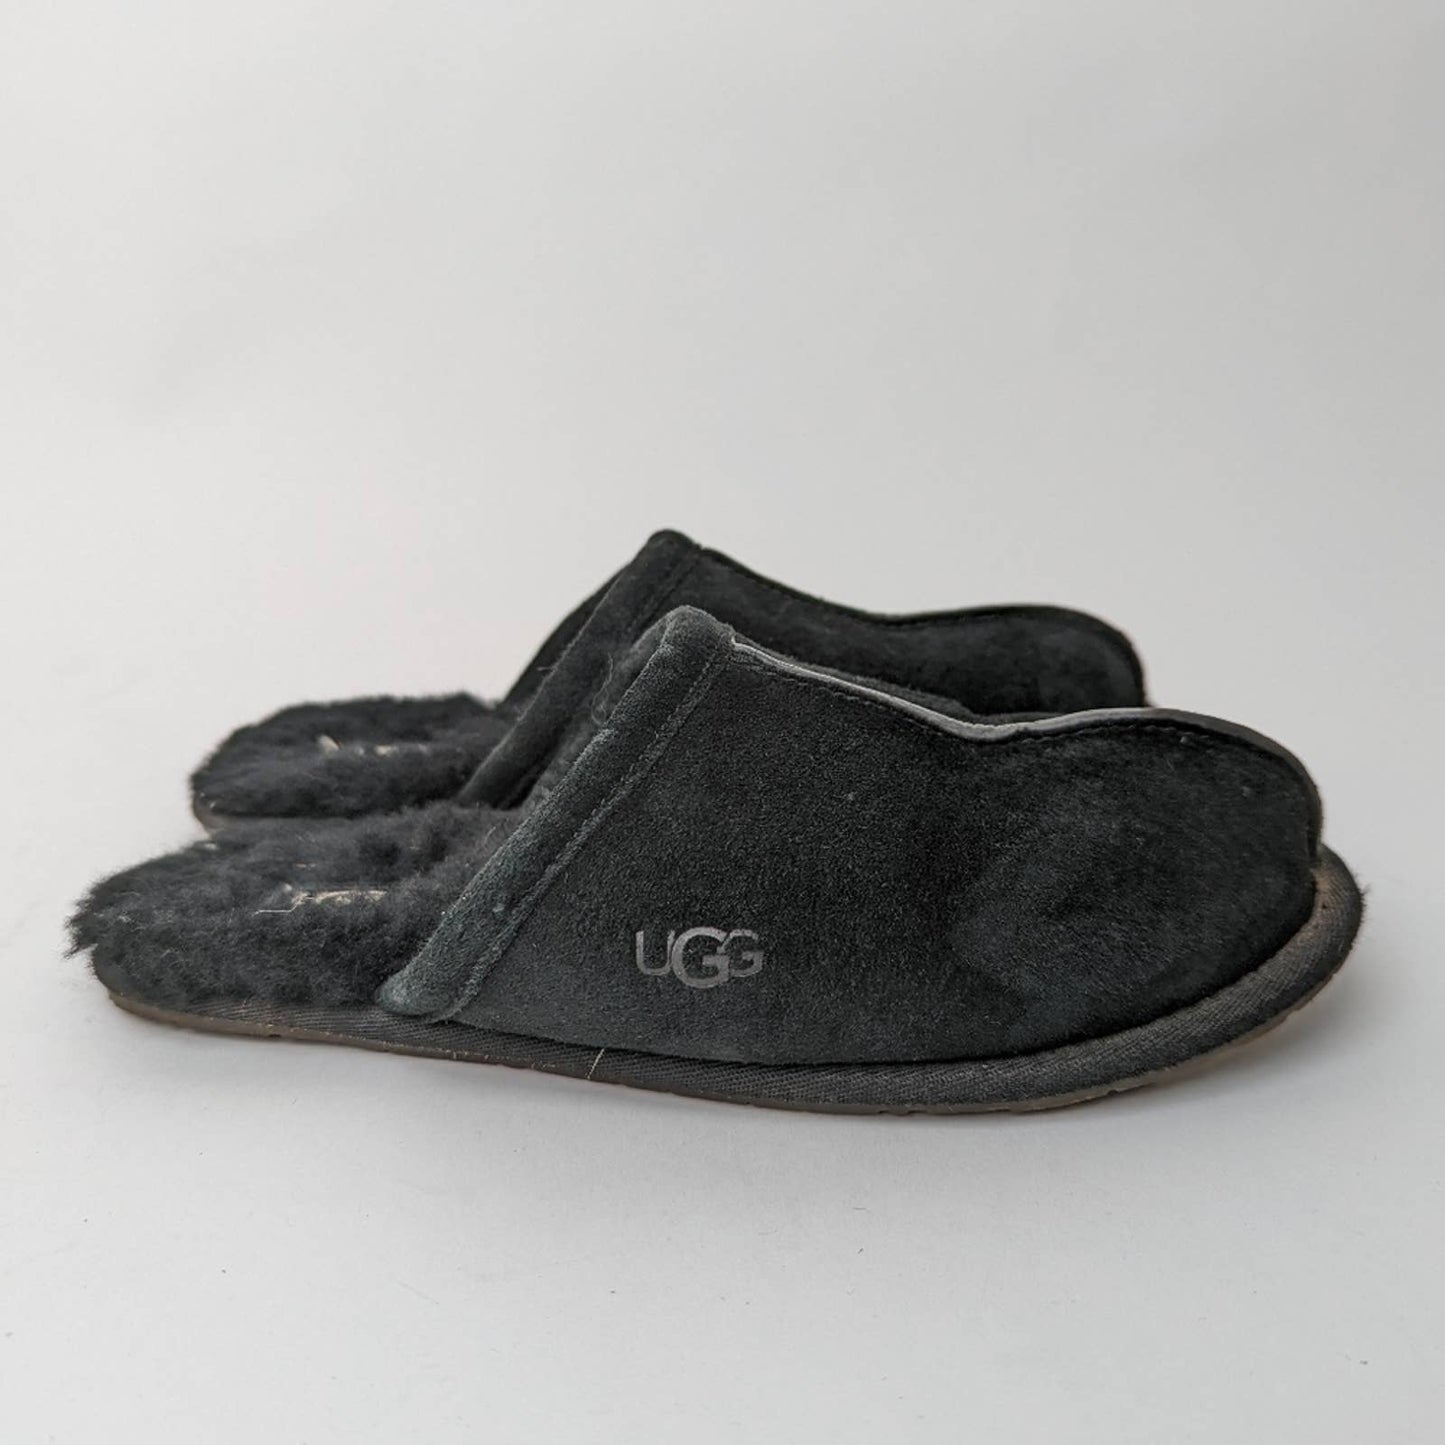 Ugg Pearle Slippers - Black - 8